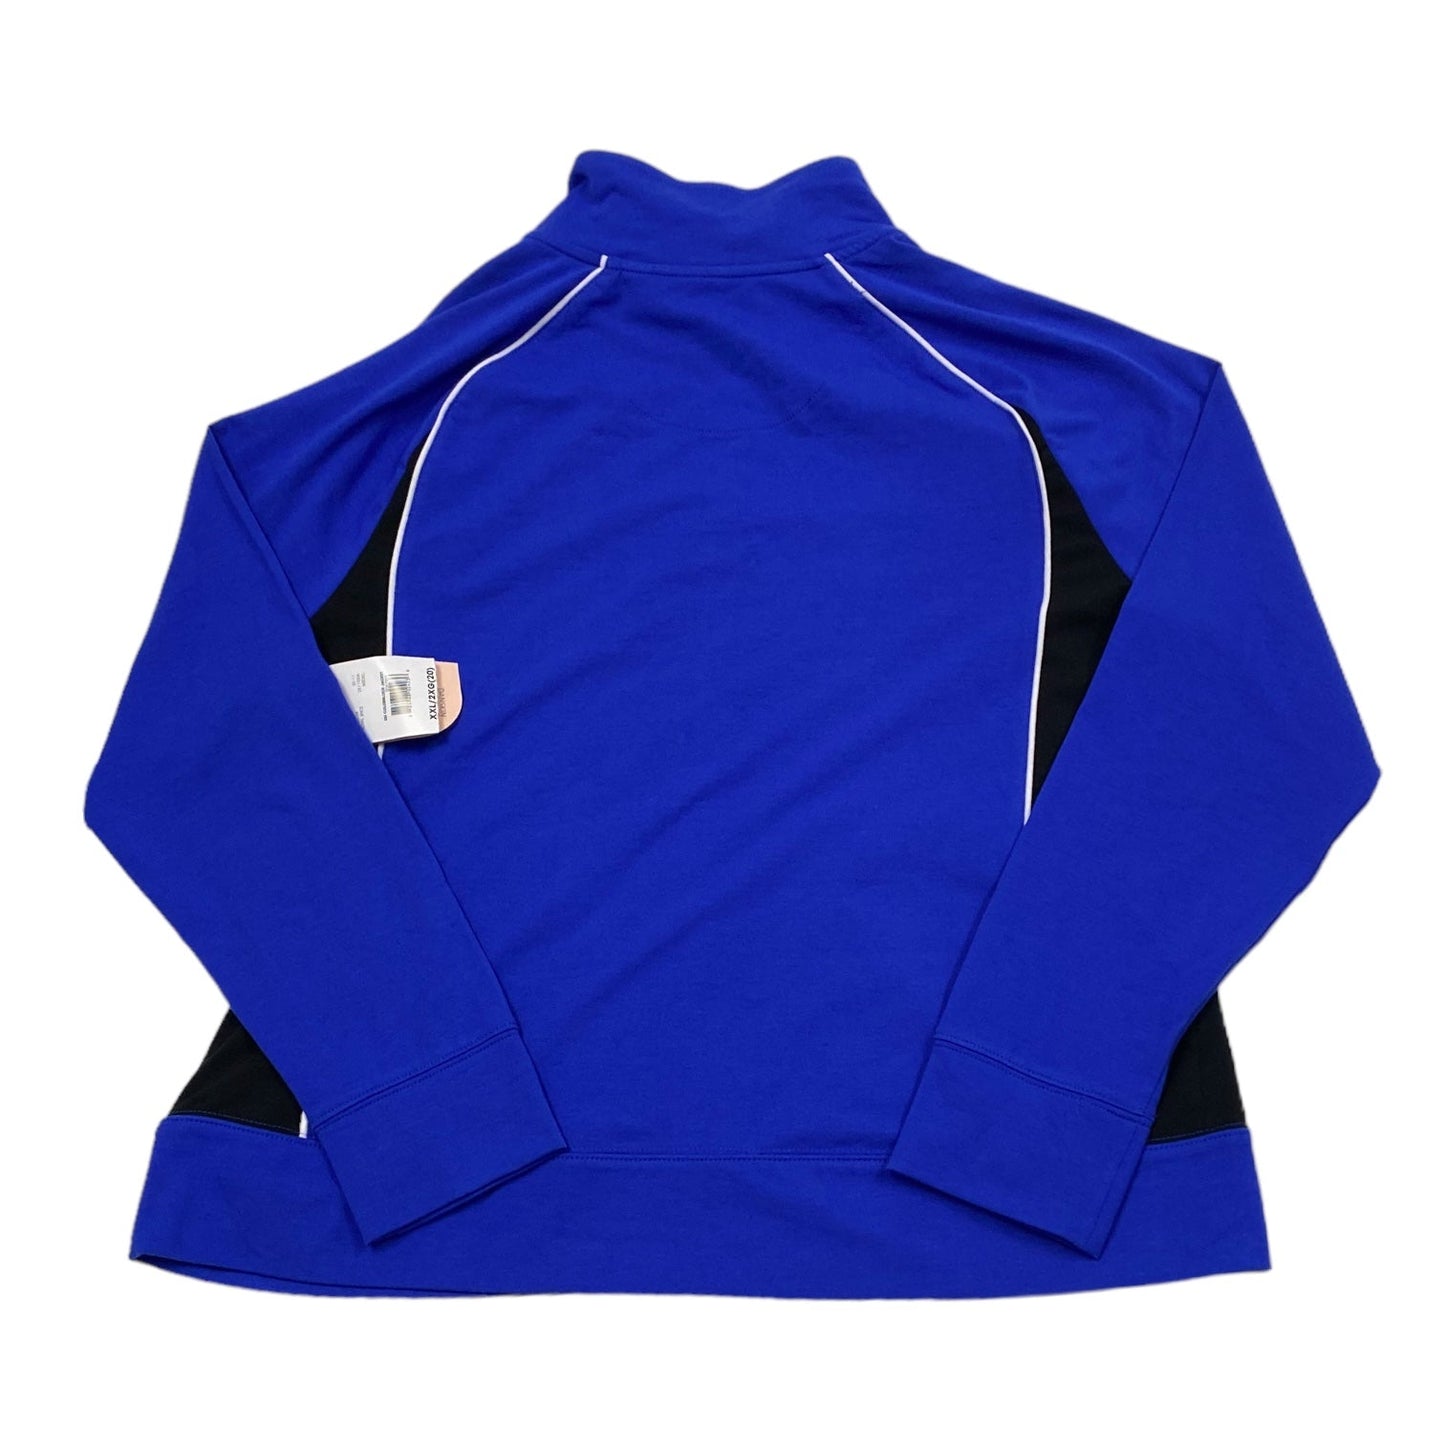 Blue Athletic Jacket Danskin, Size Xxl